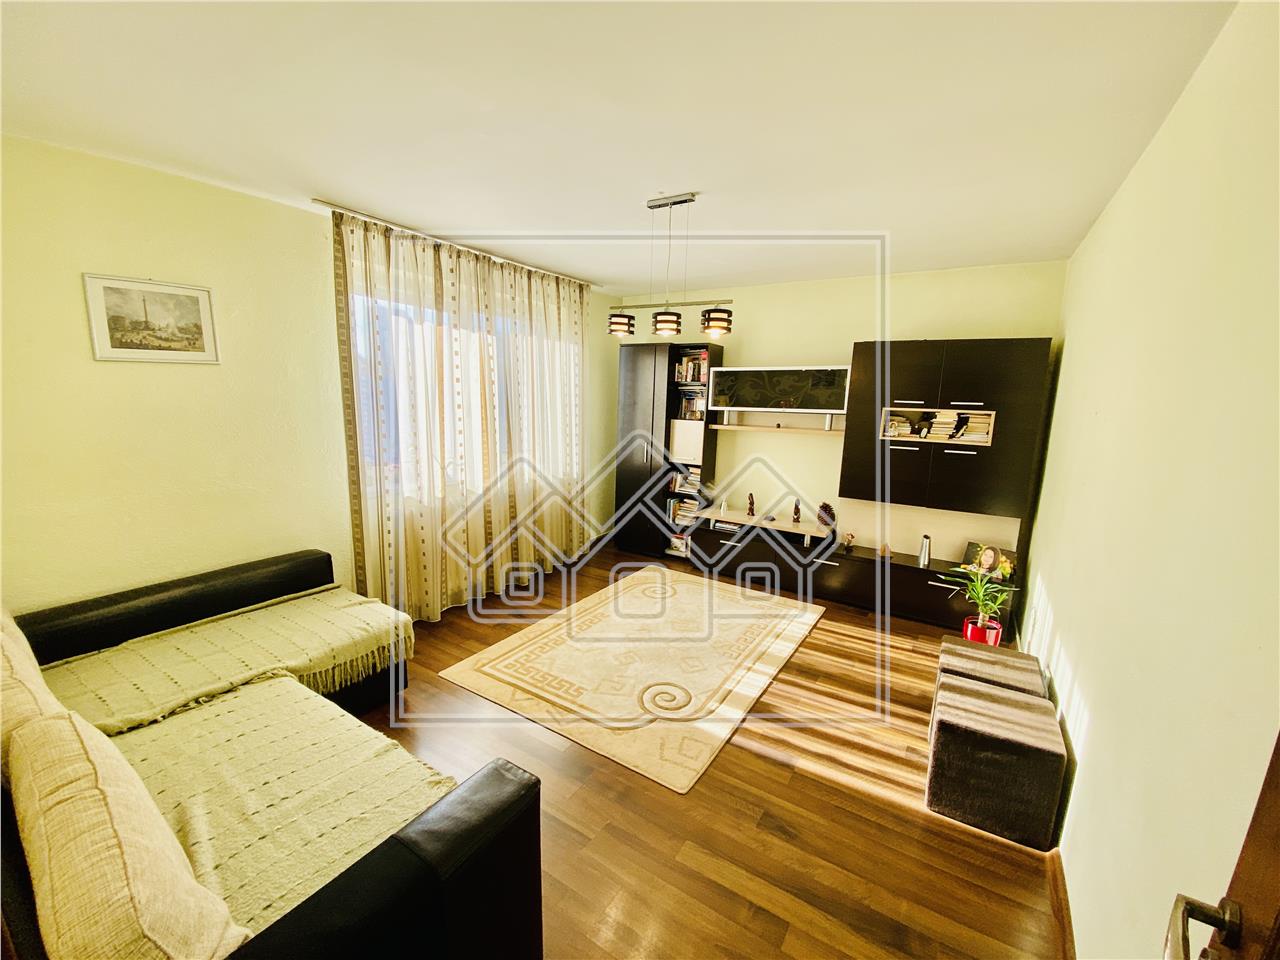 Apartament de vanzare in Sibiu-2 camere,balcon si pivnita-Vasile Milea